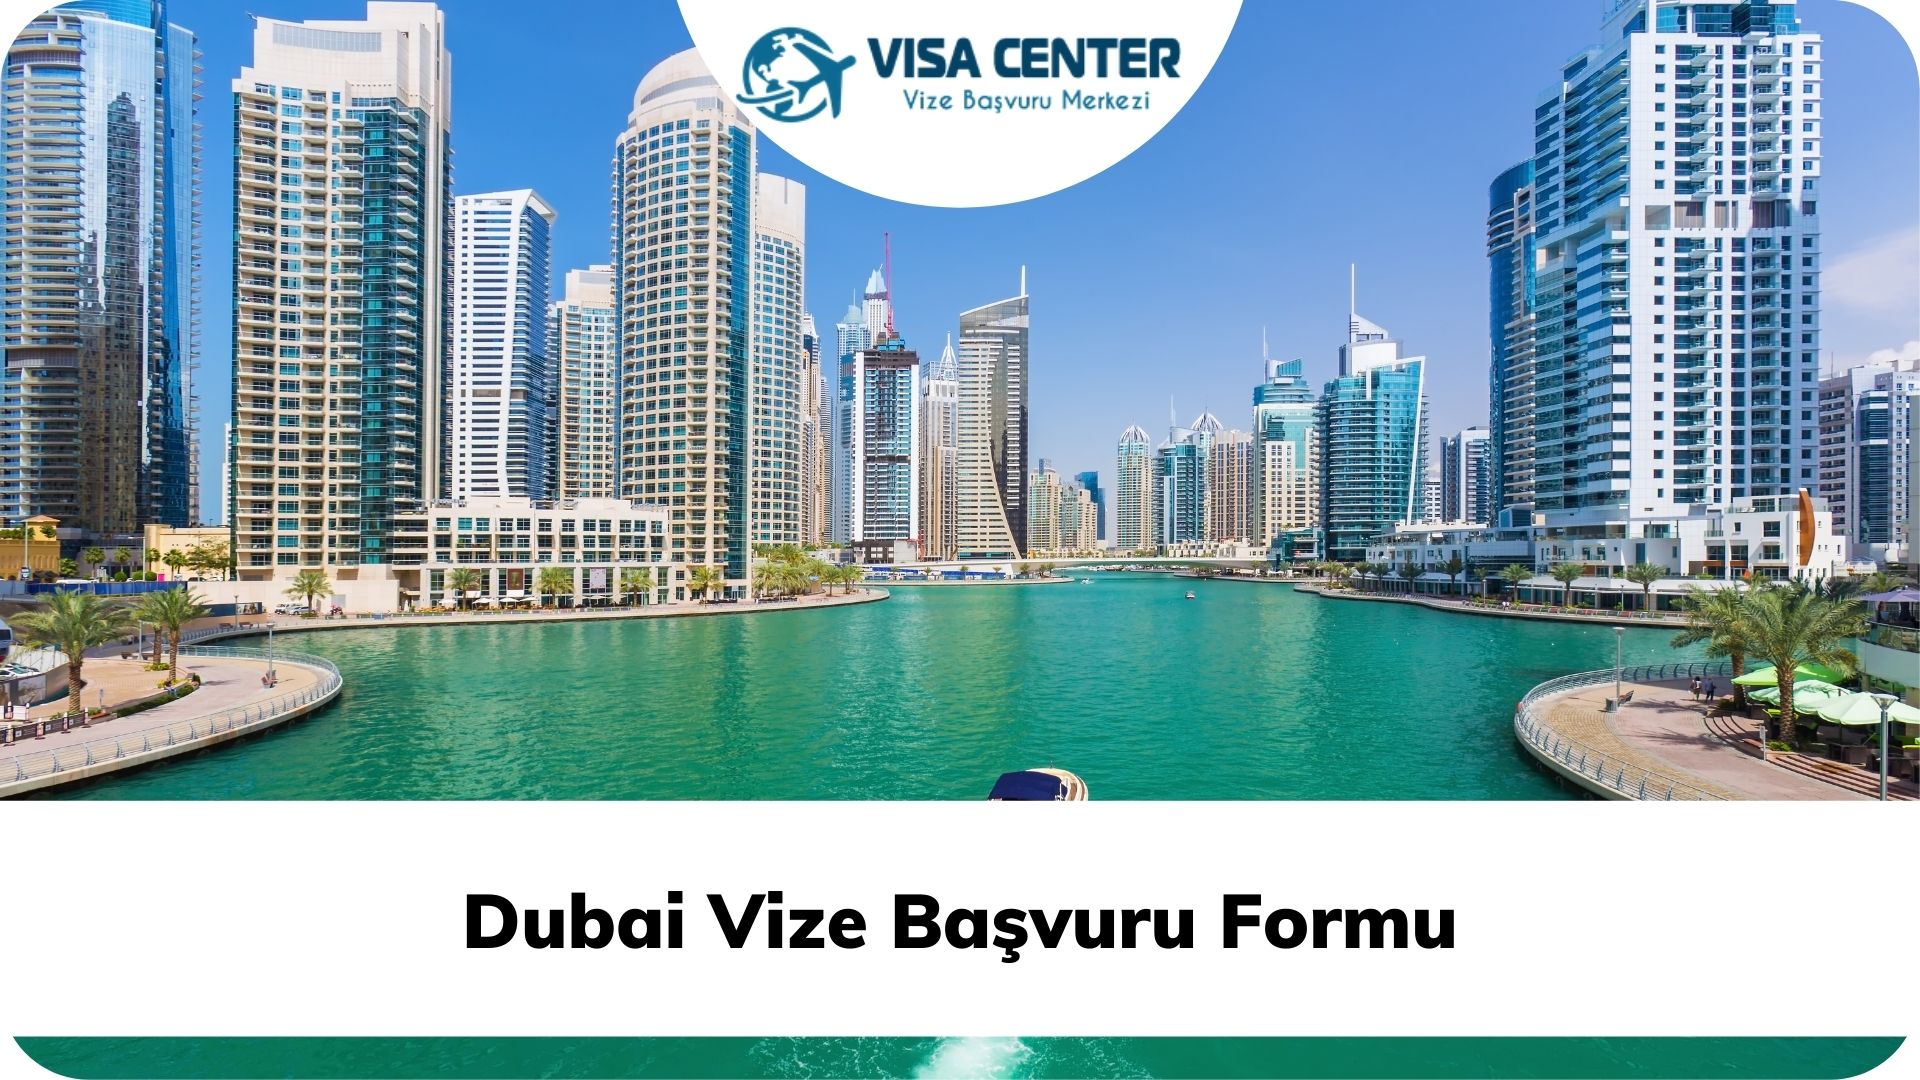 Dubai Vize Başvuru Formu